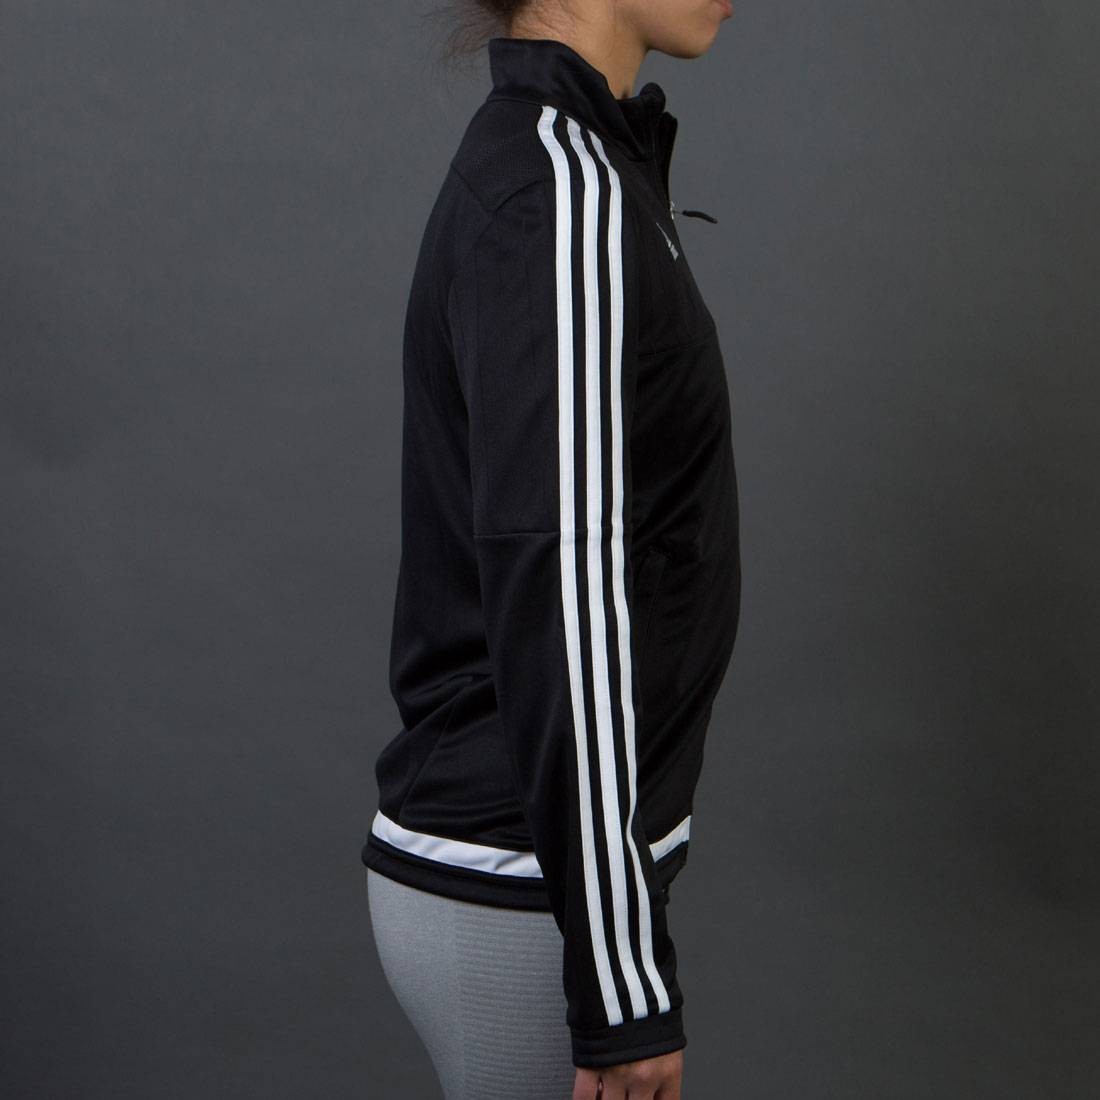 Adidas Women Tiro Training Jacket white